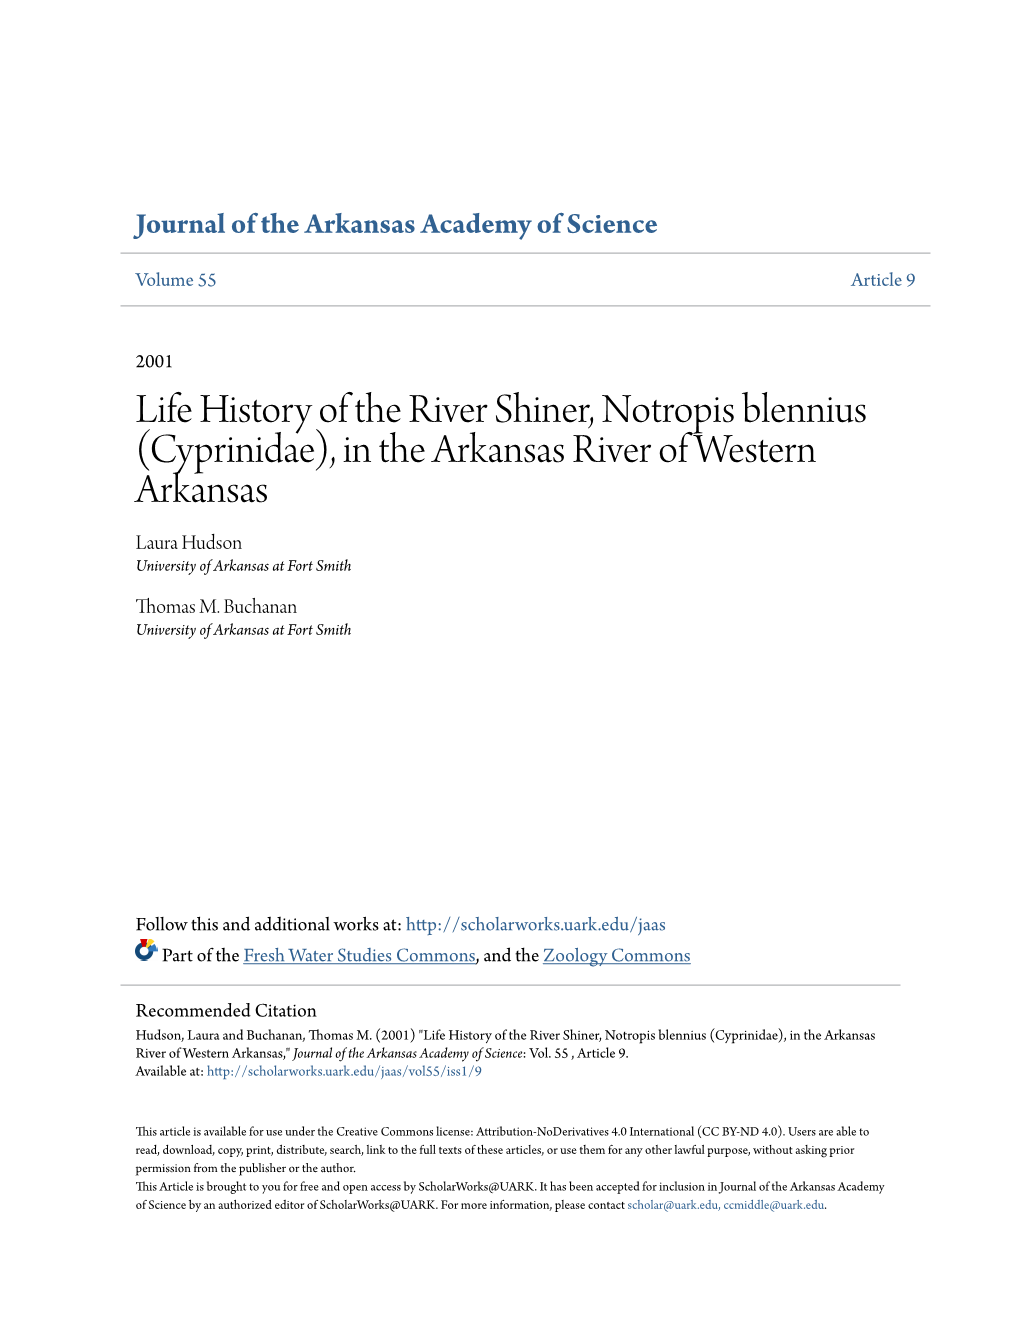 Life History of the River Shiner, Notropis Blennius (Cyprinidae), in the Arkansas River of Western Arkansas Laura Hudson University of Arkansas at Fort Smith